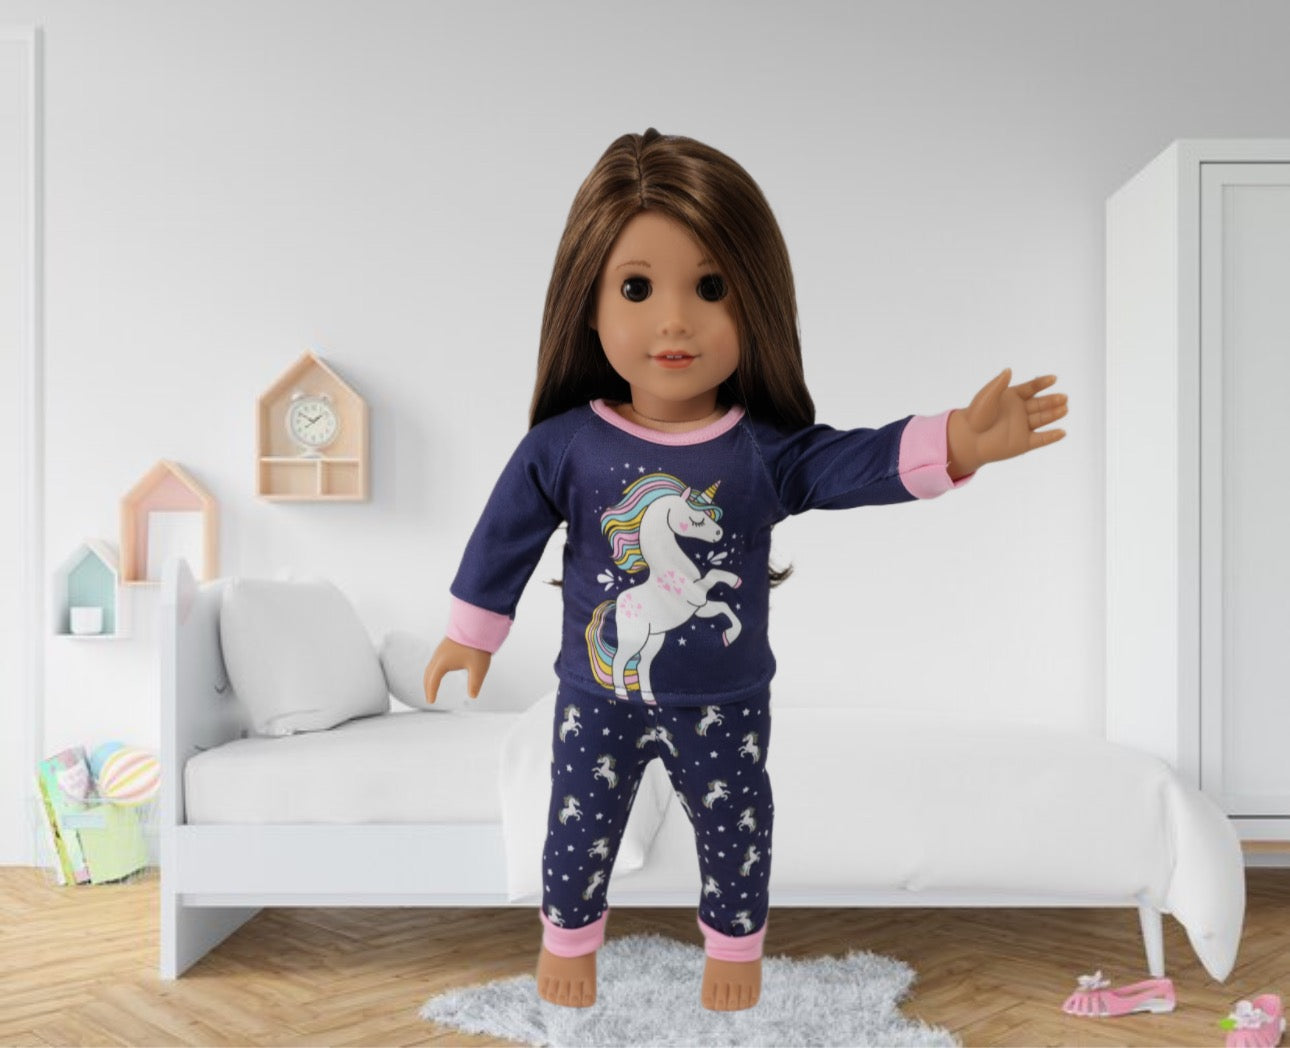 Doll Clothing - Unicorn Pajamas 18 inch Dolls